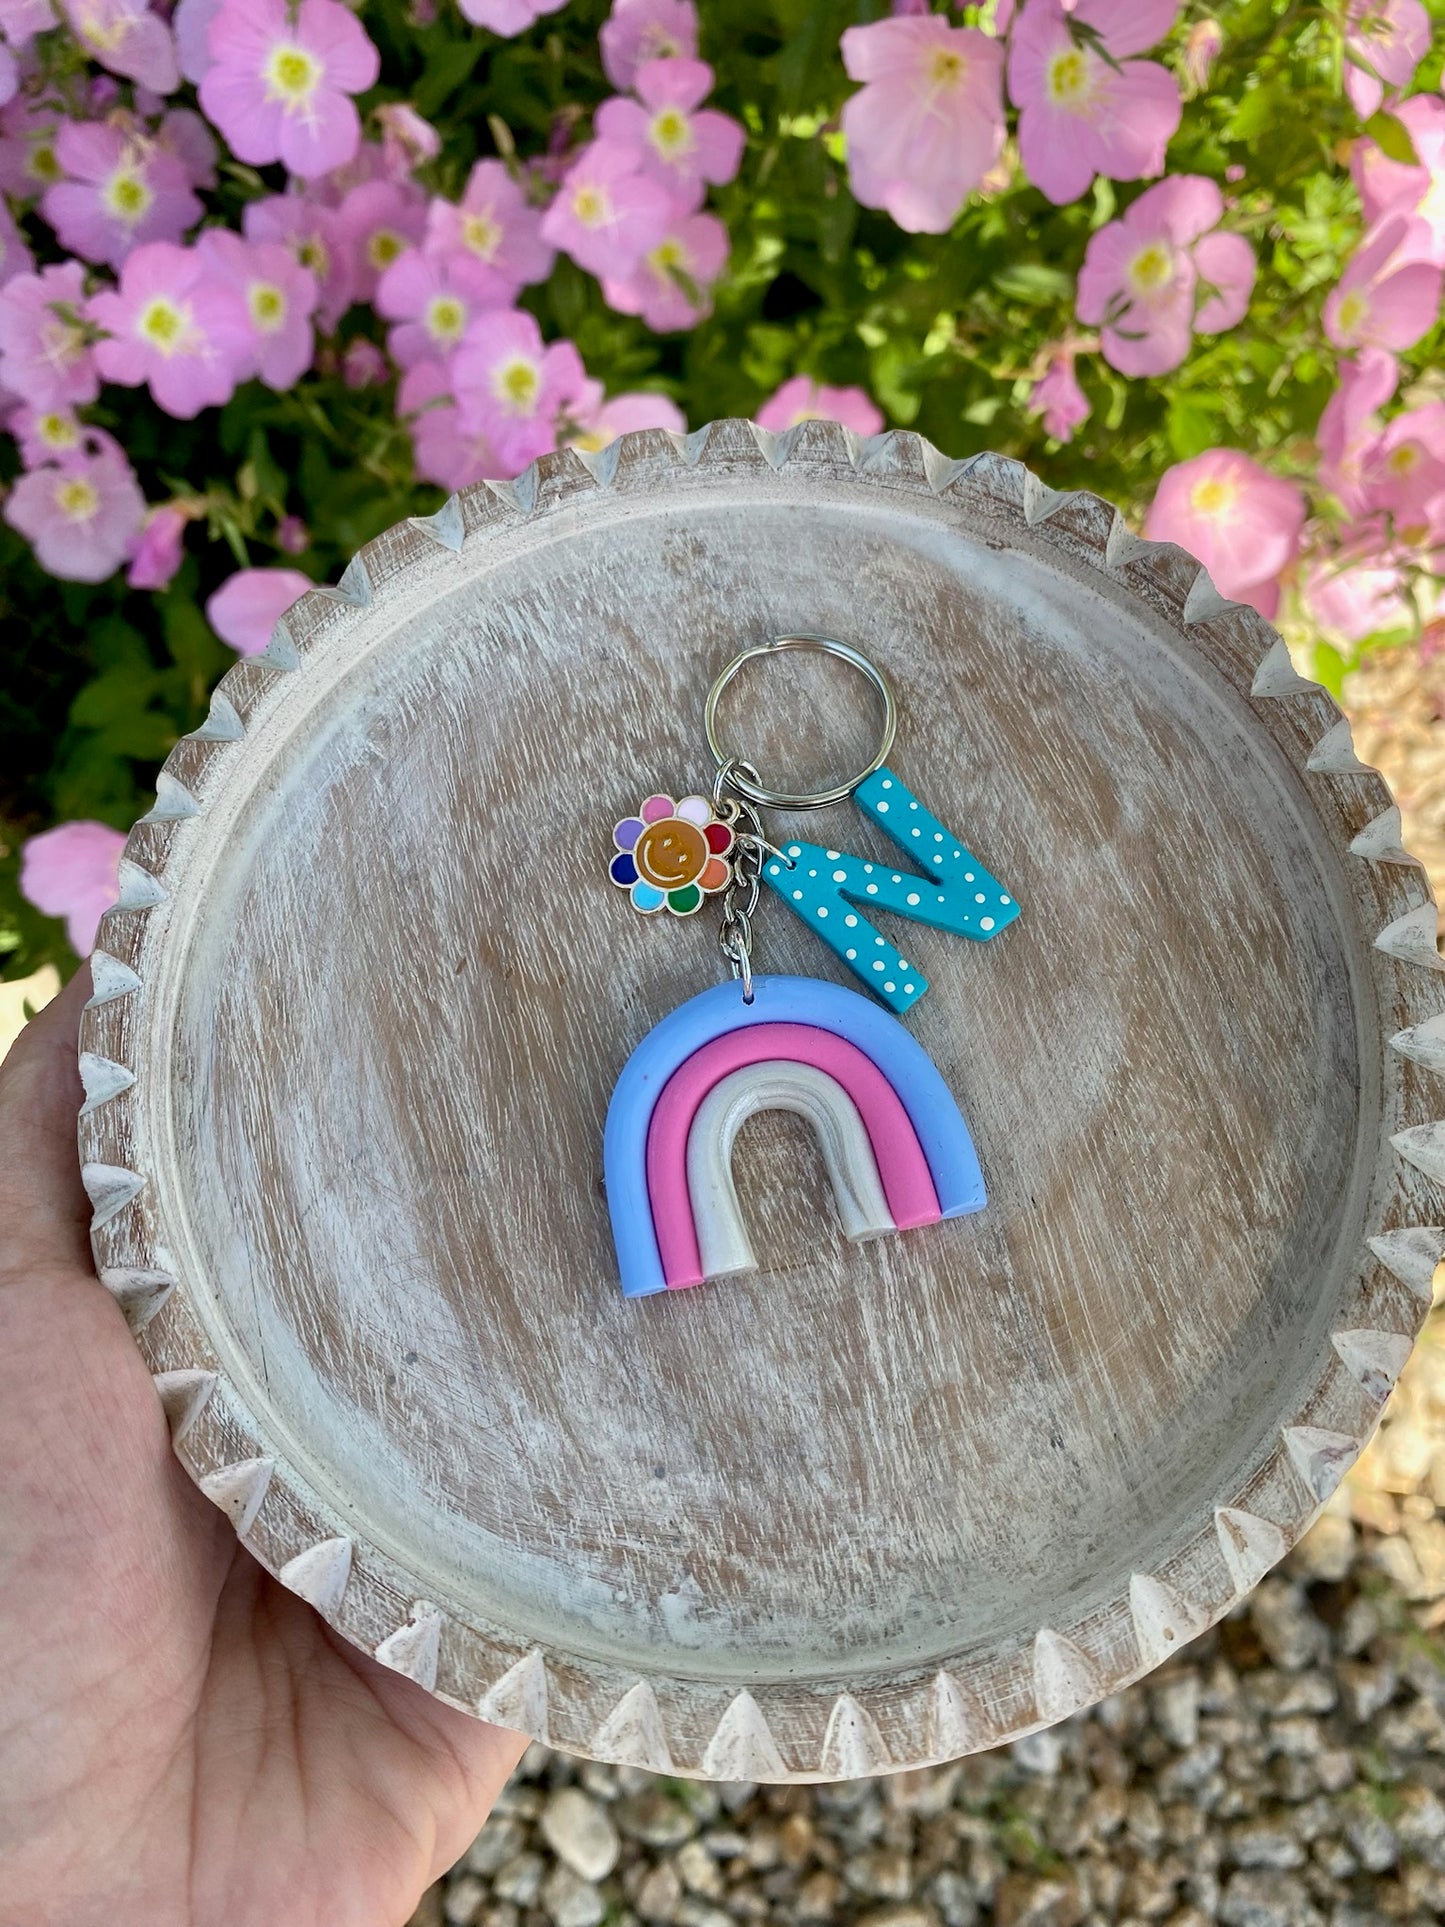 Make Your Own Rainbow Clay Keychain!